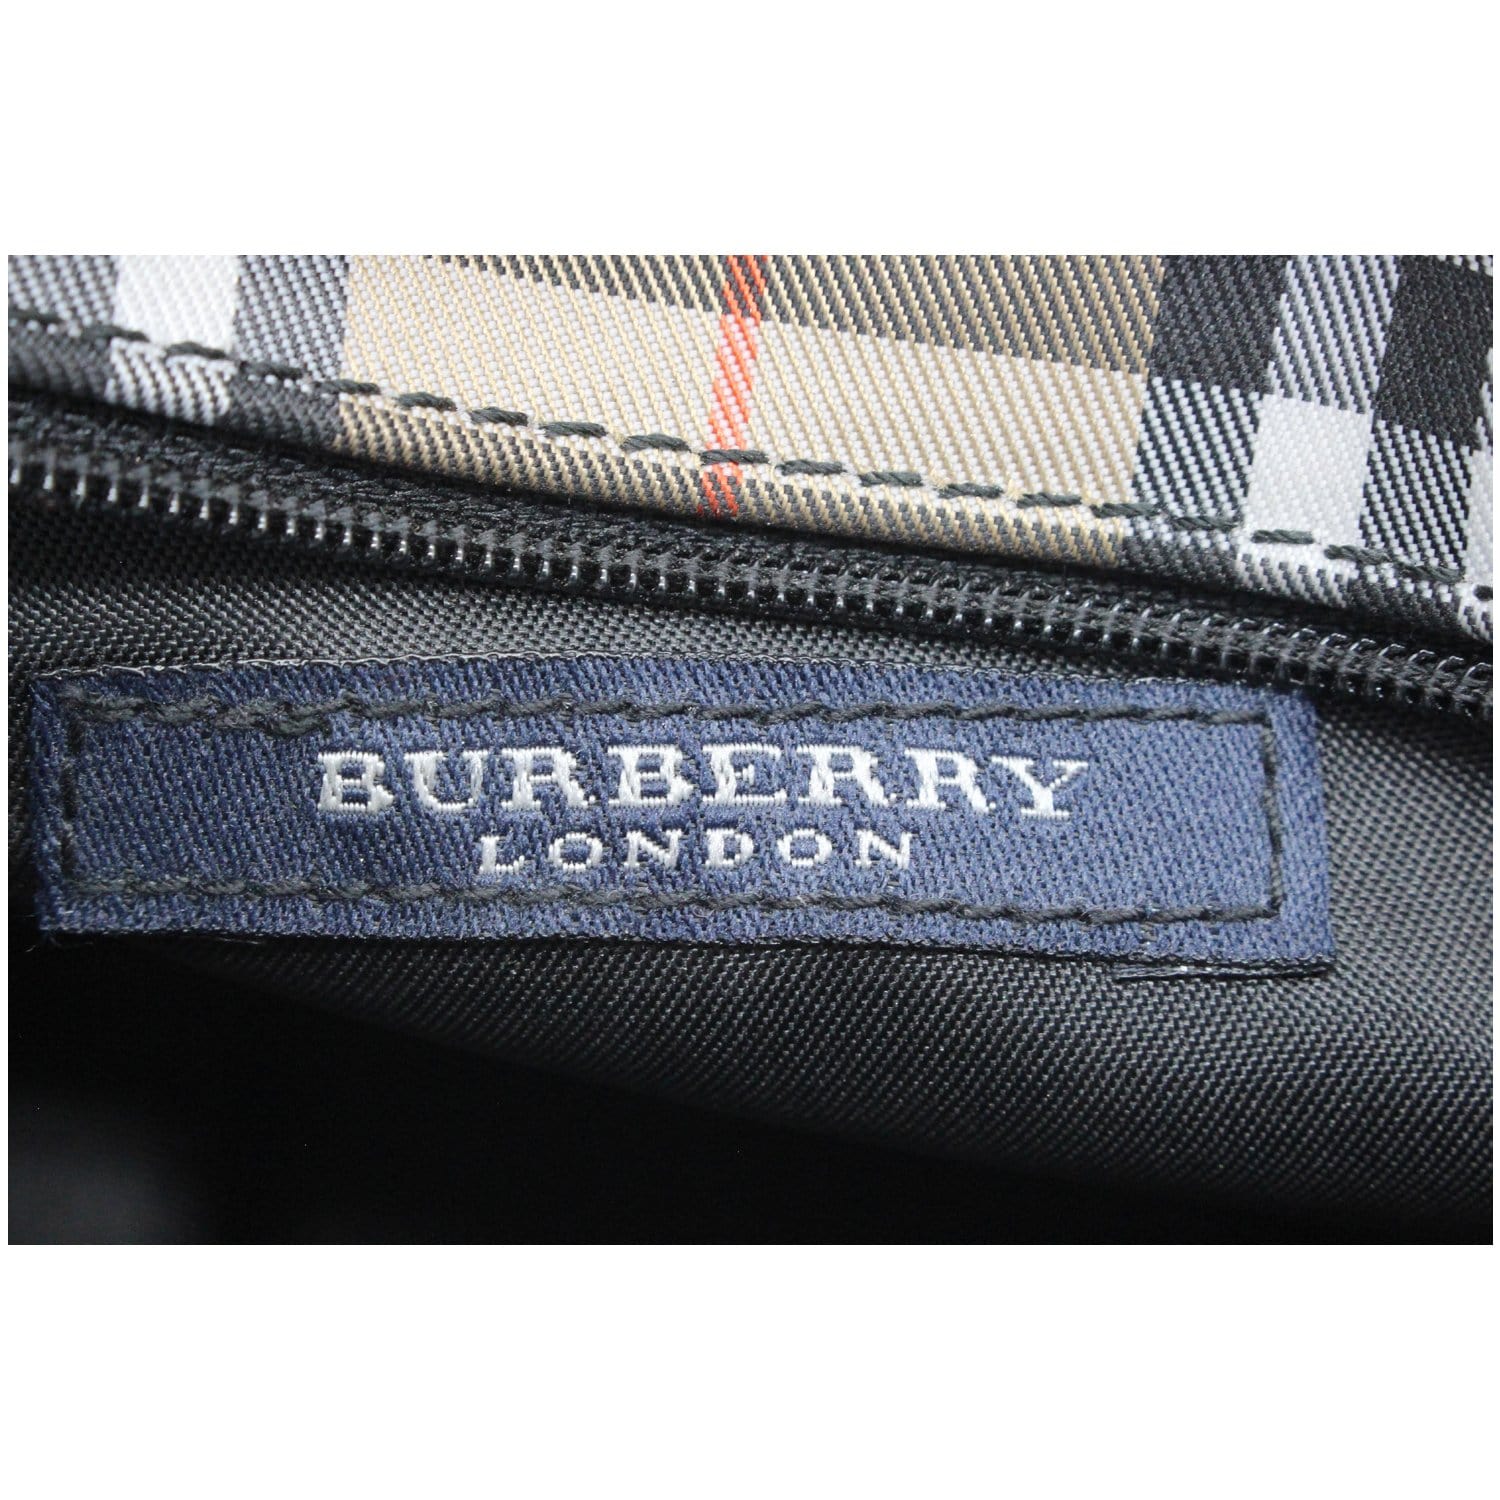 Real vs. Fake Burberry purse. How to spot fake Burberry bag and purses 